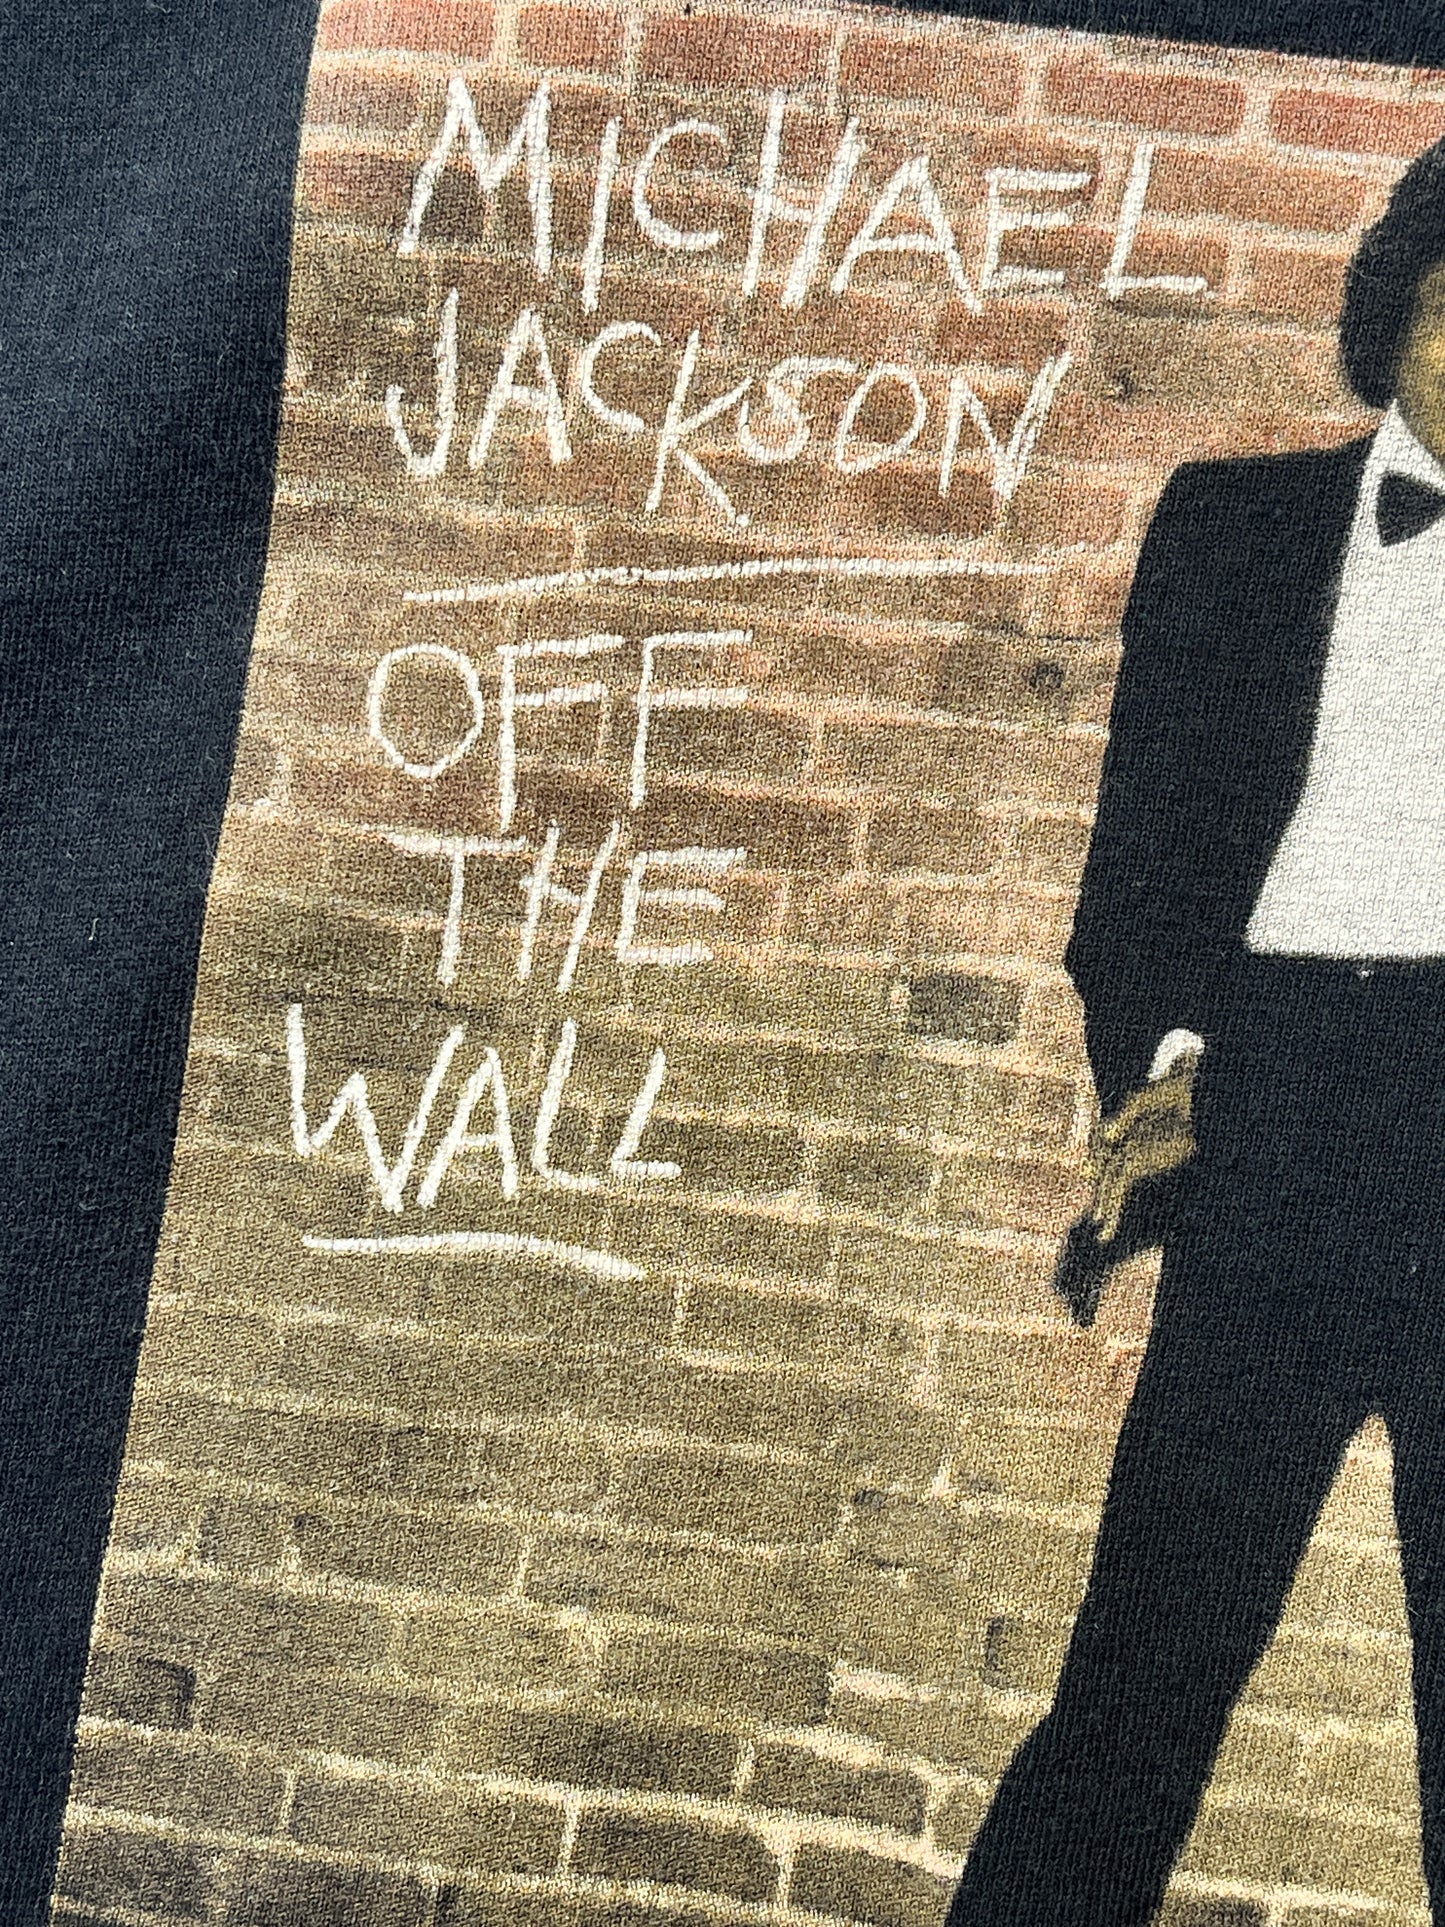 Vintage Michael Jackson T-Shirt Off The Wall Band Tee